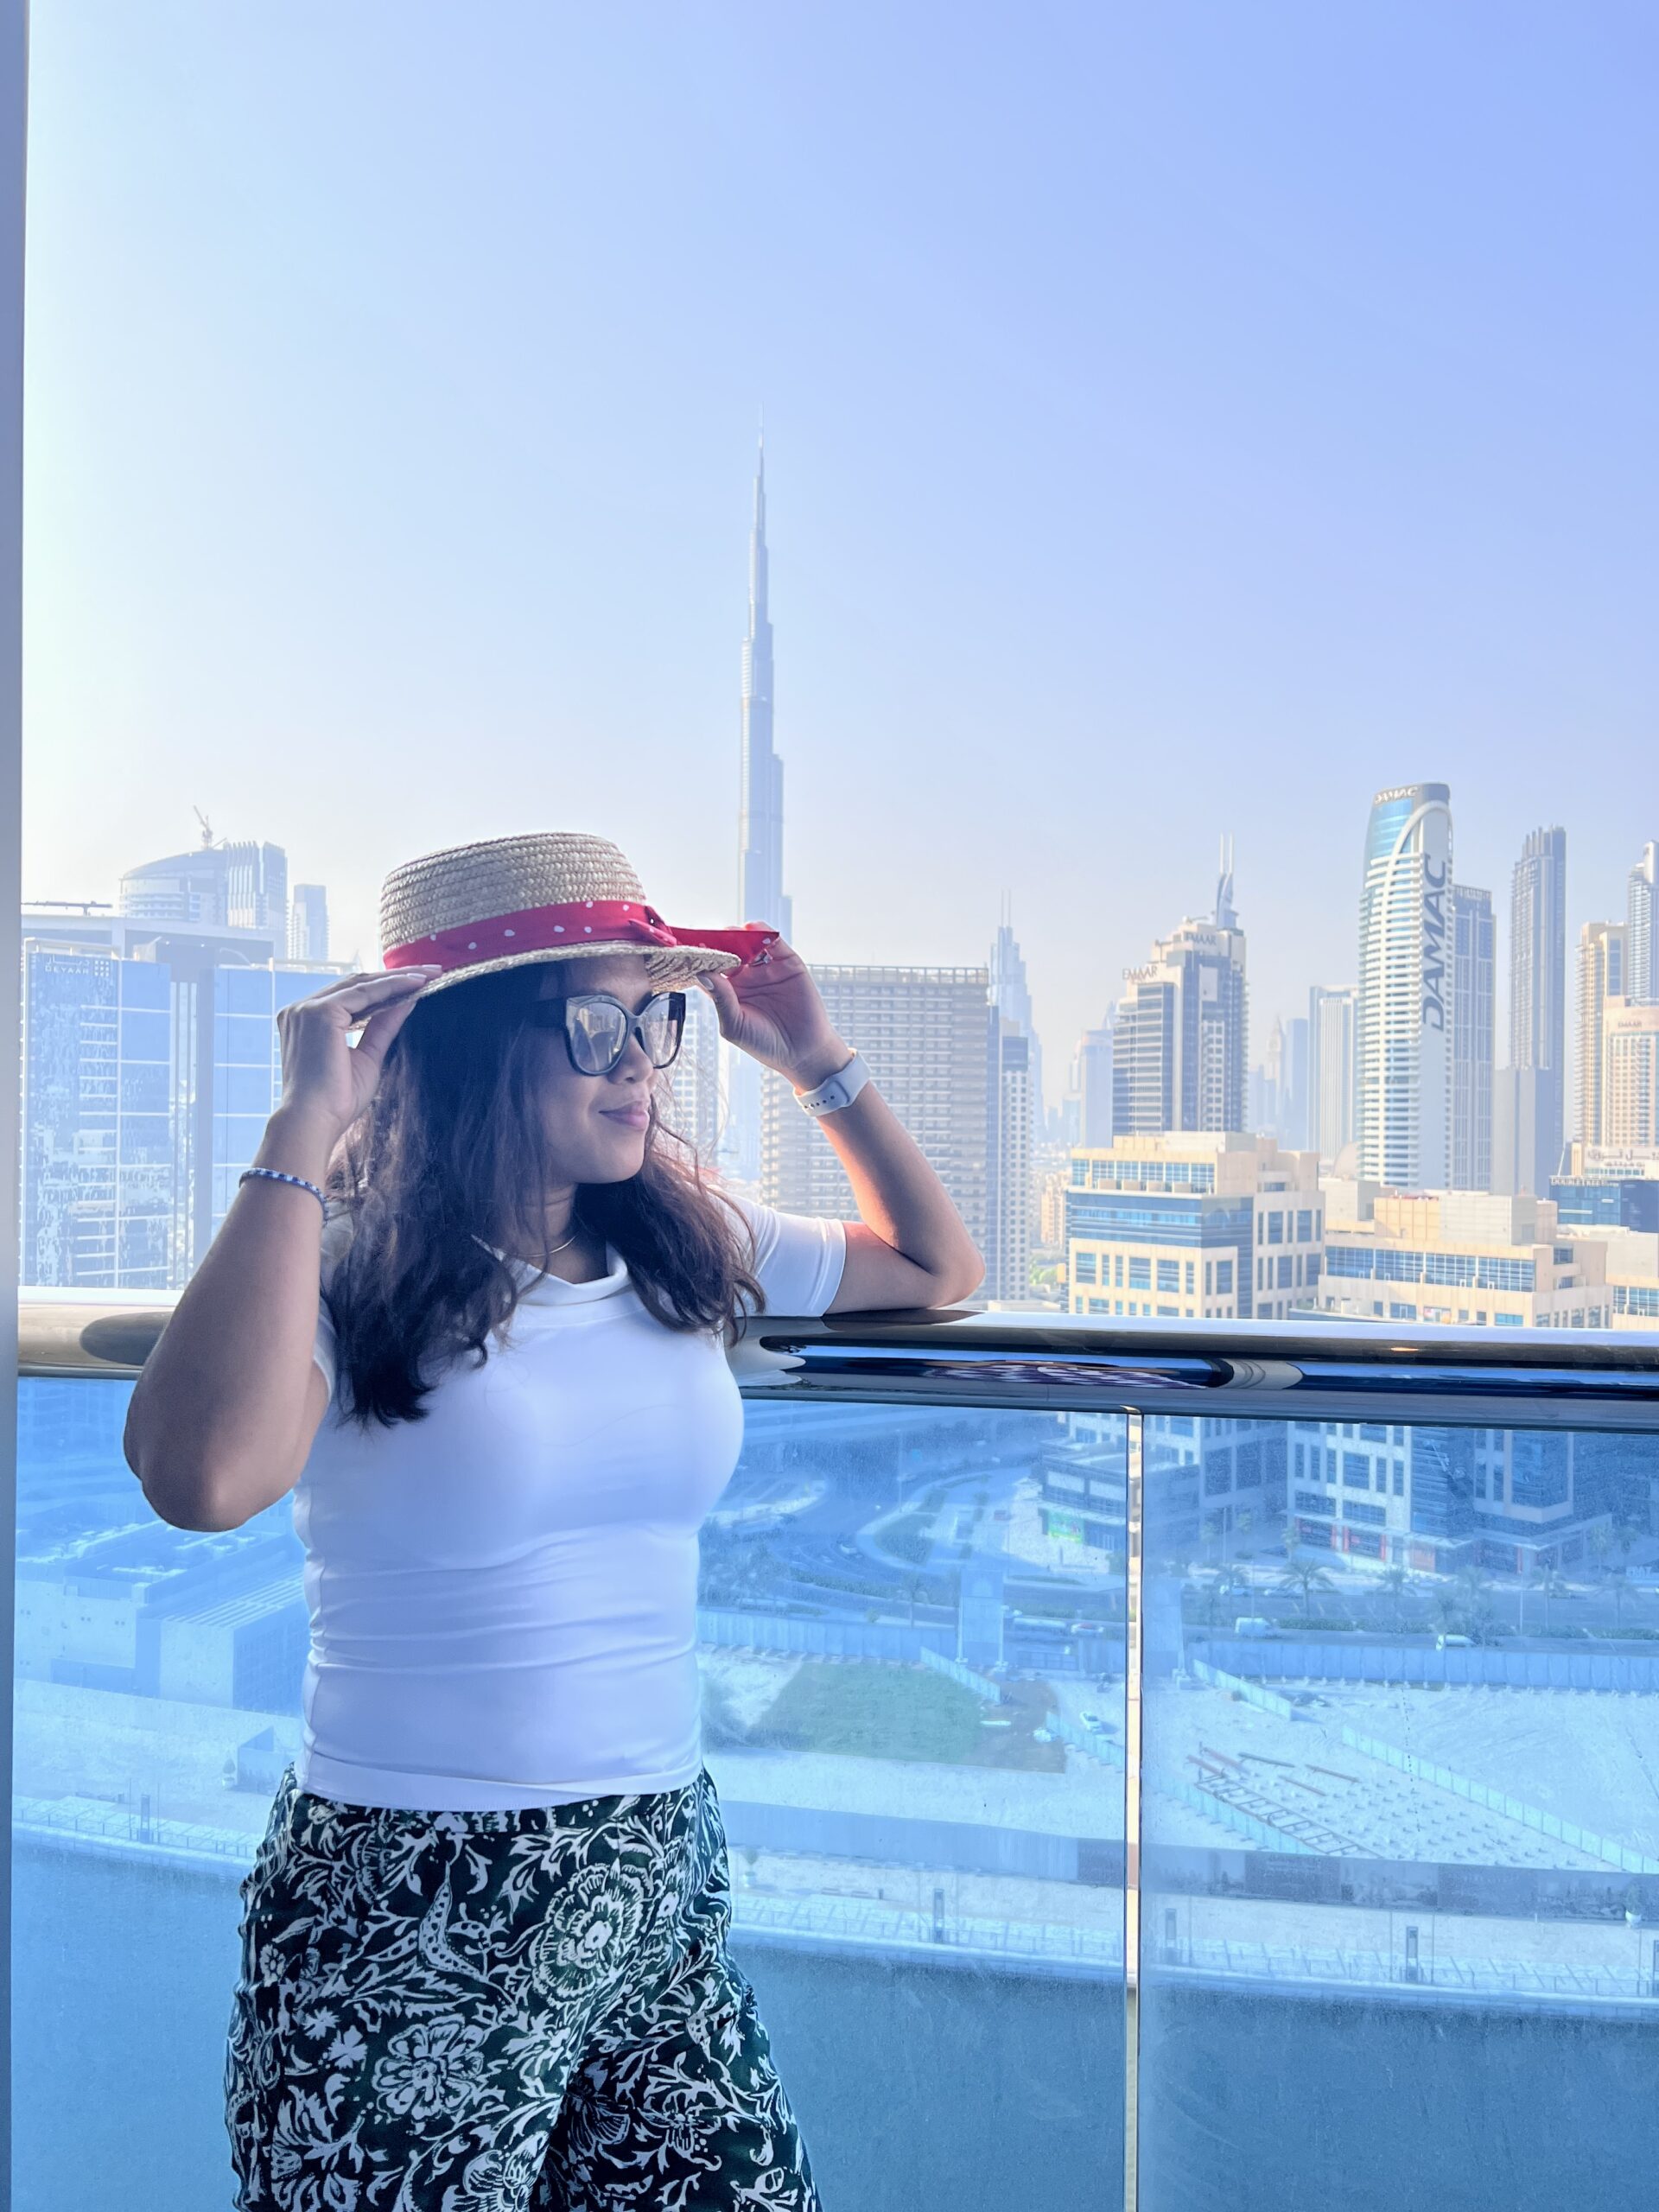 The Hyde Dubai with Burj Khalifa at its backdrop.